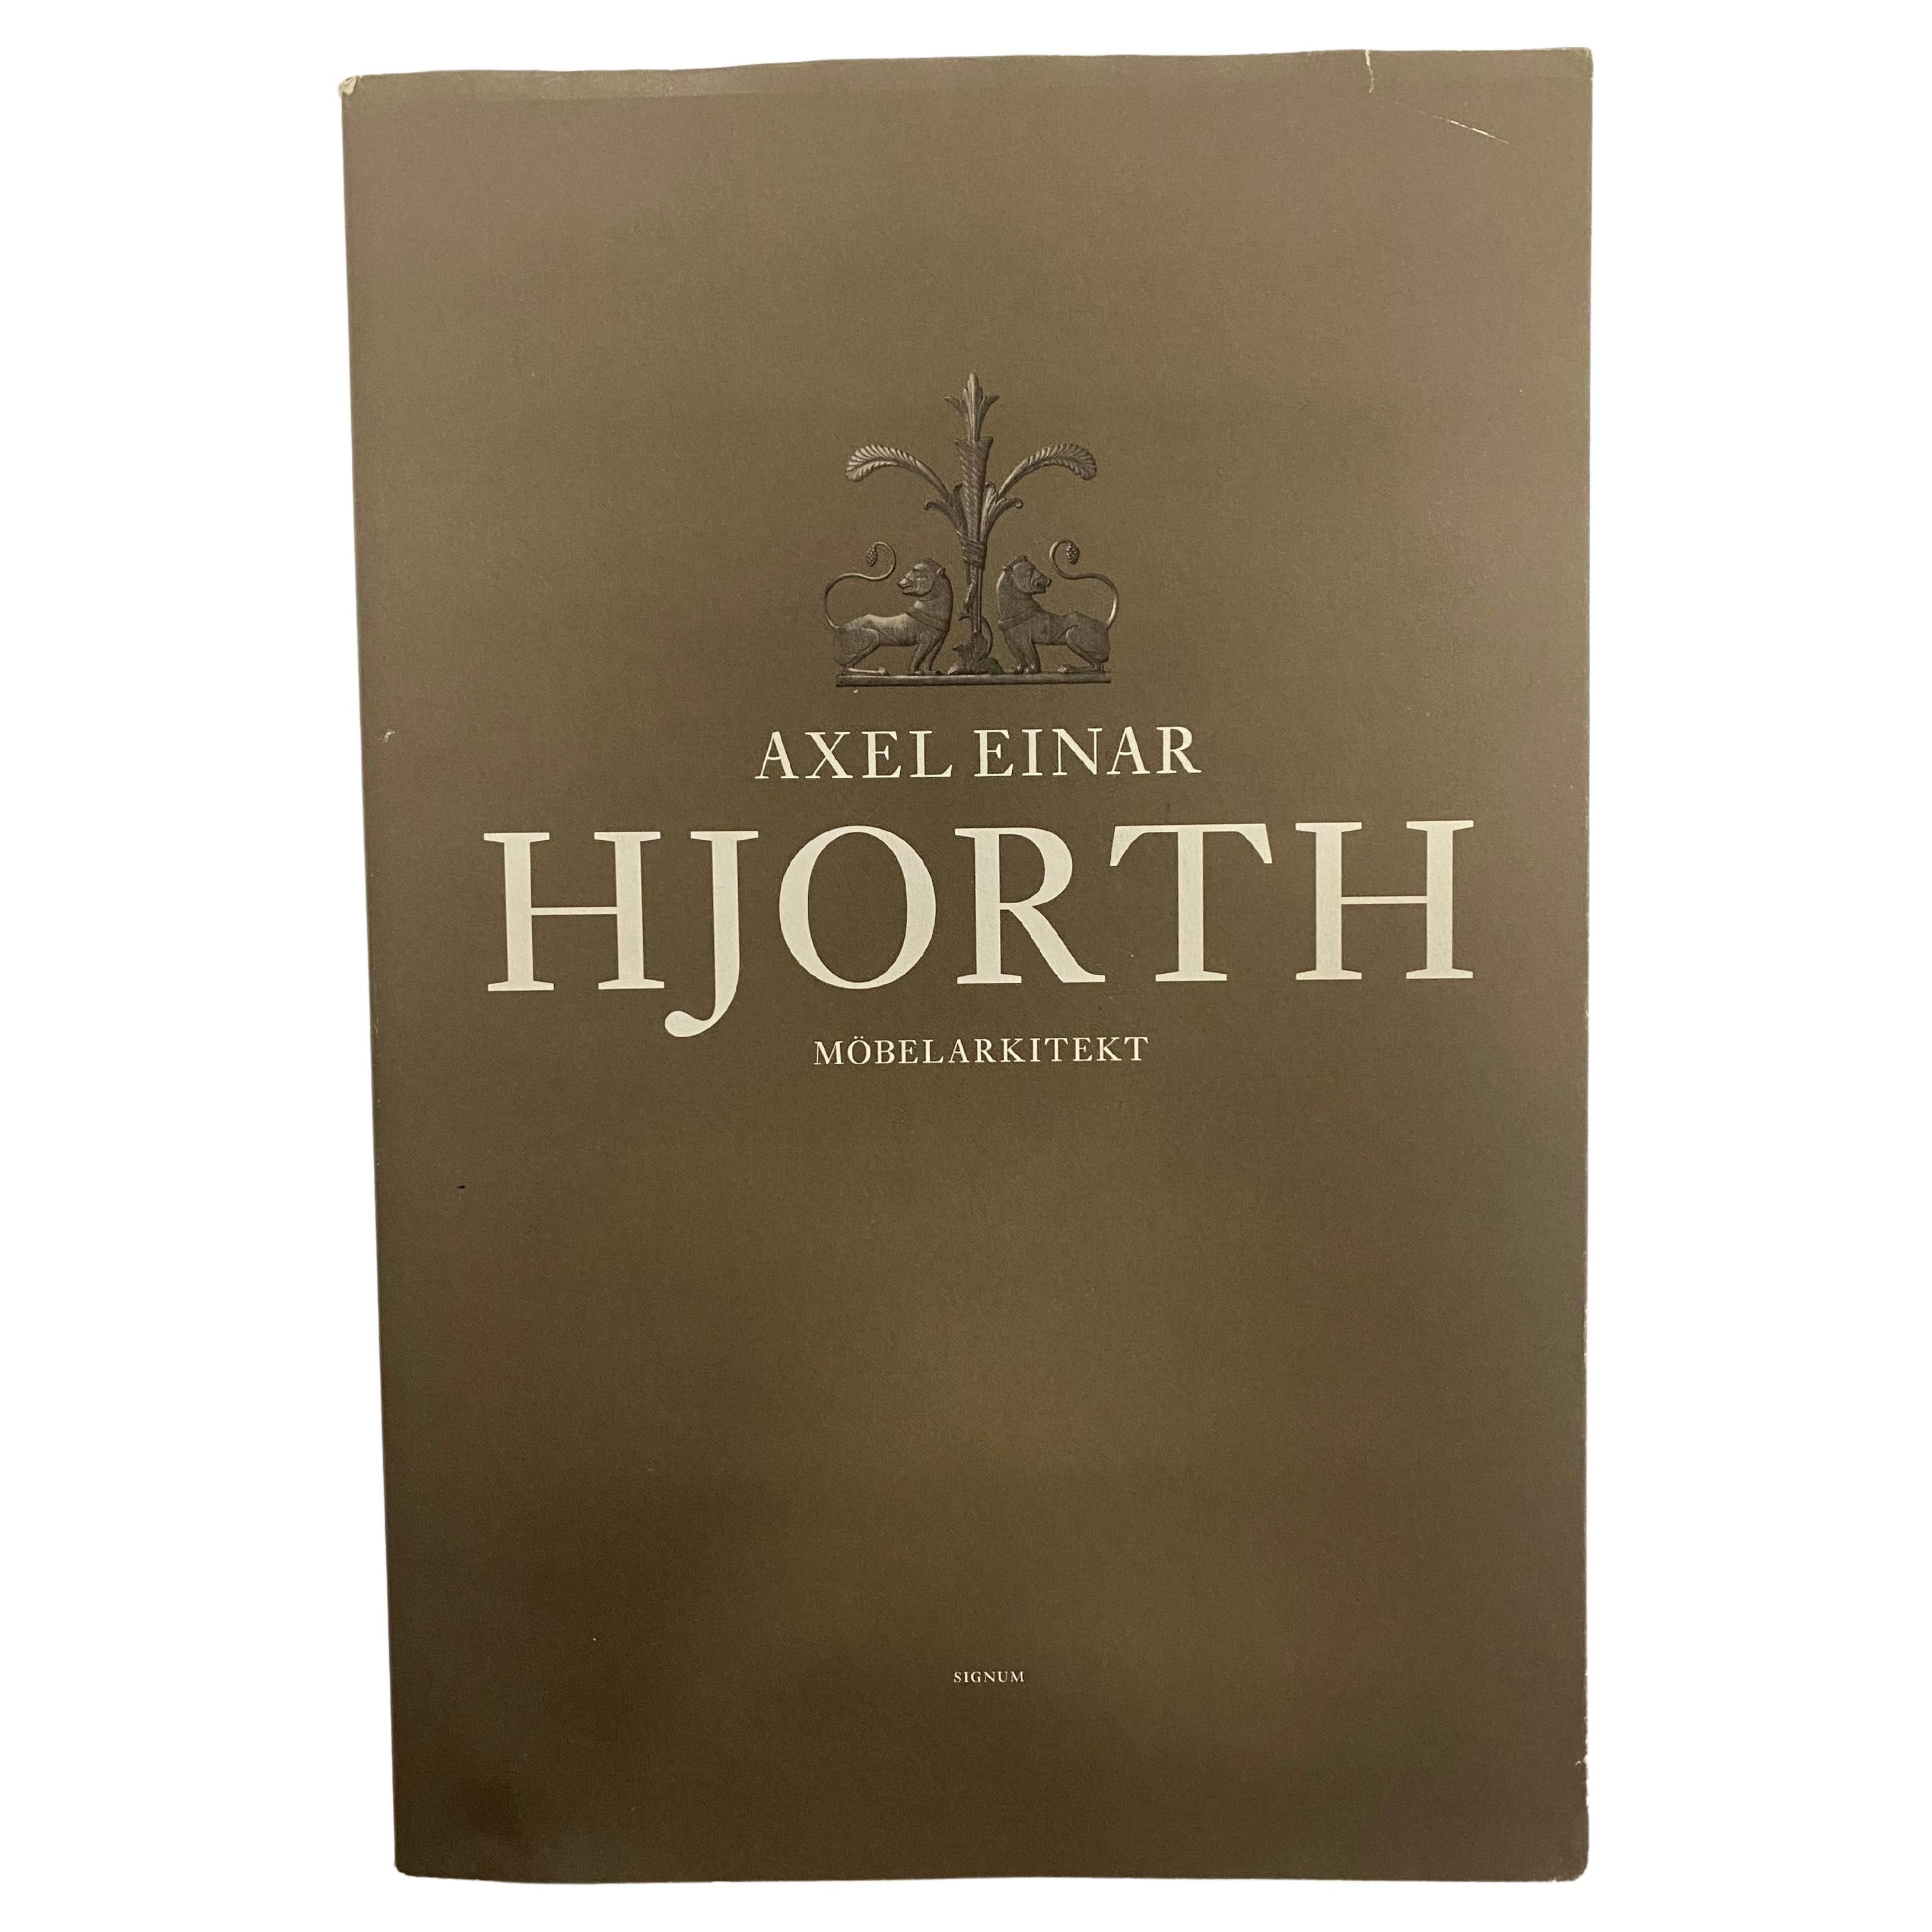 Axel Einar Hjorth: Mobelarkitekt (Book)